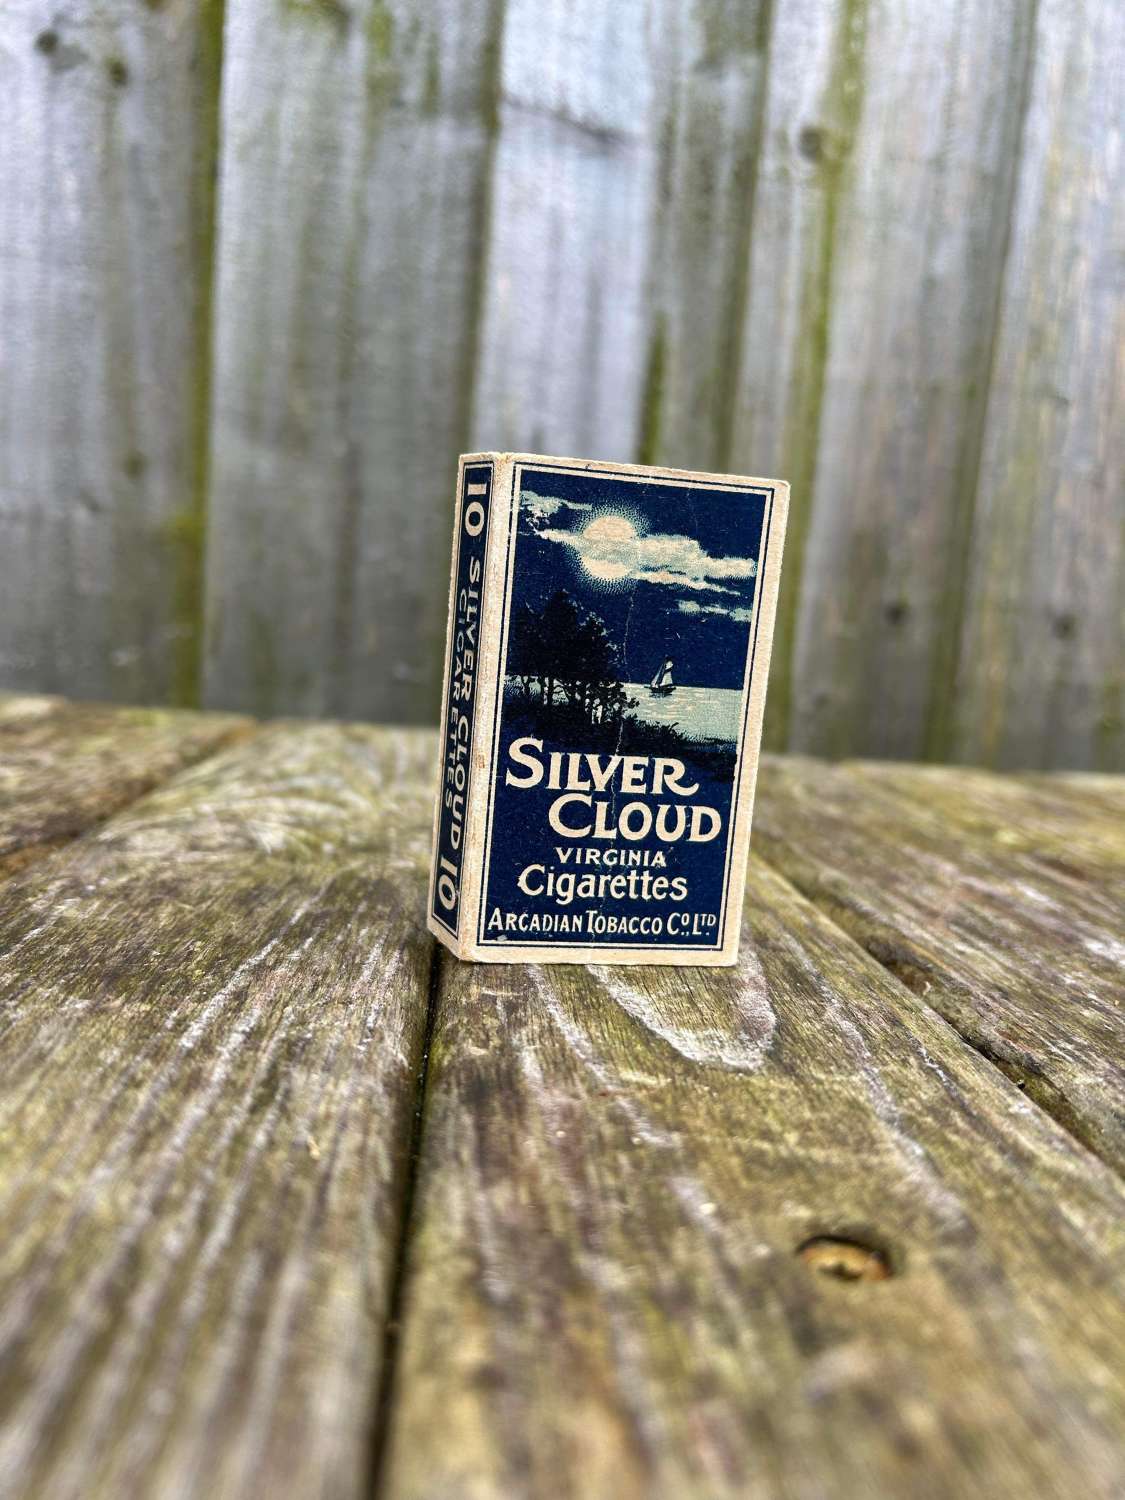 Silver cloud cigarette packet